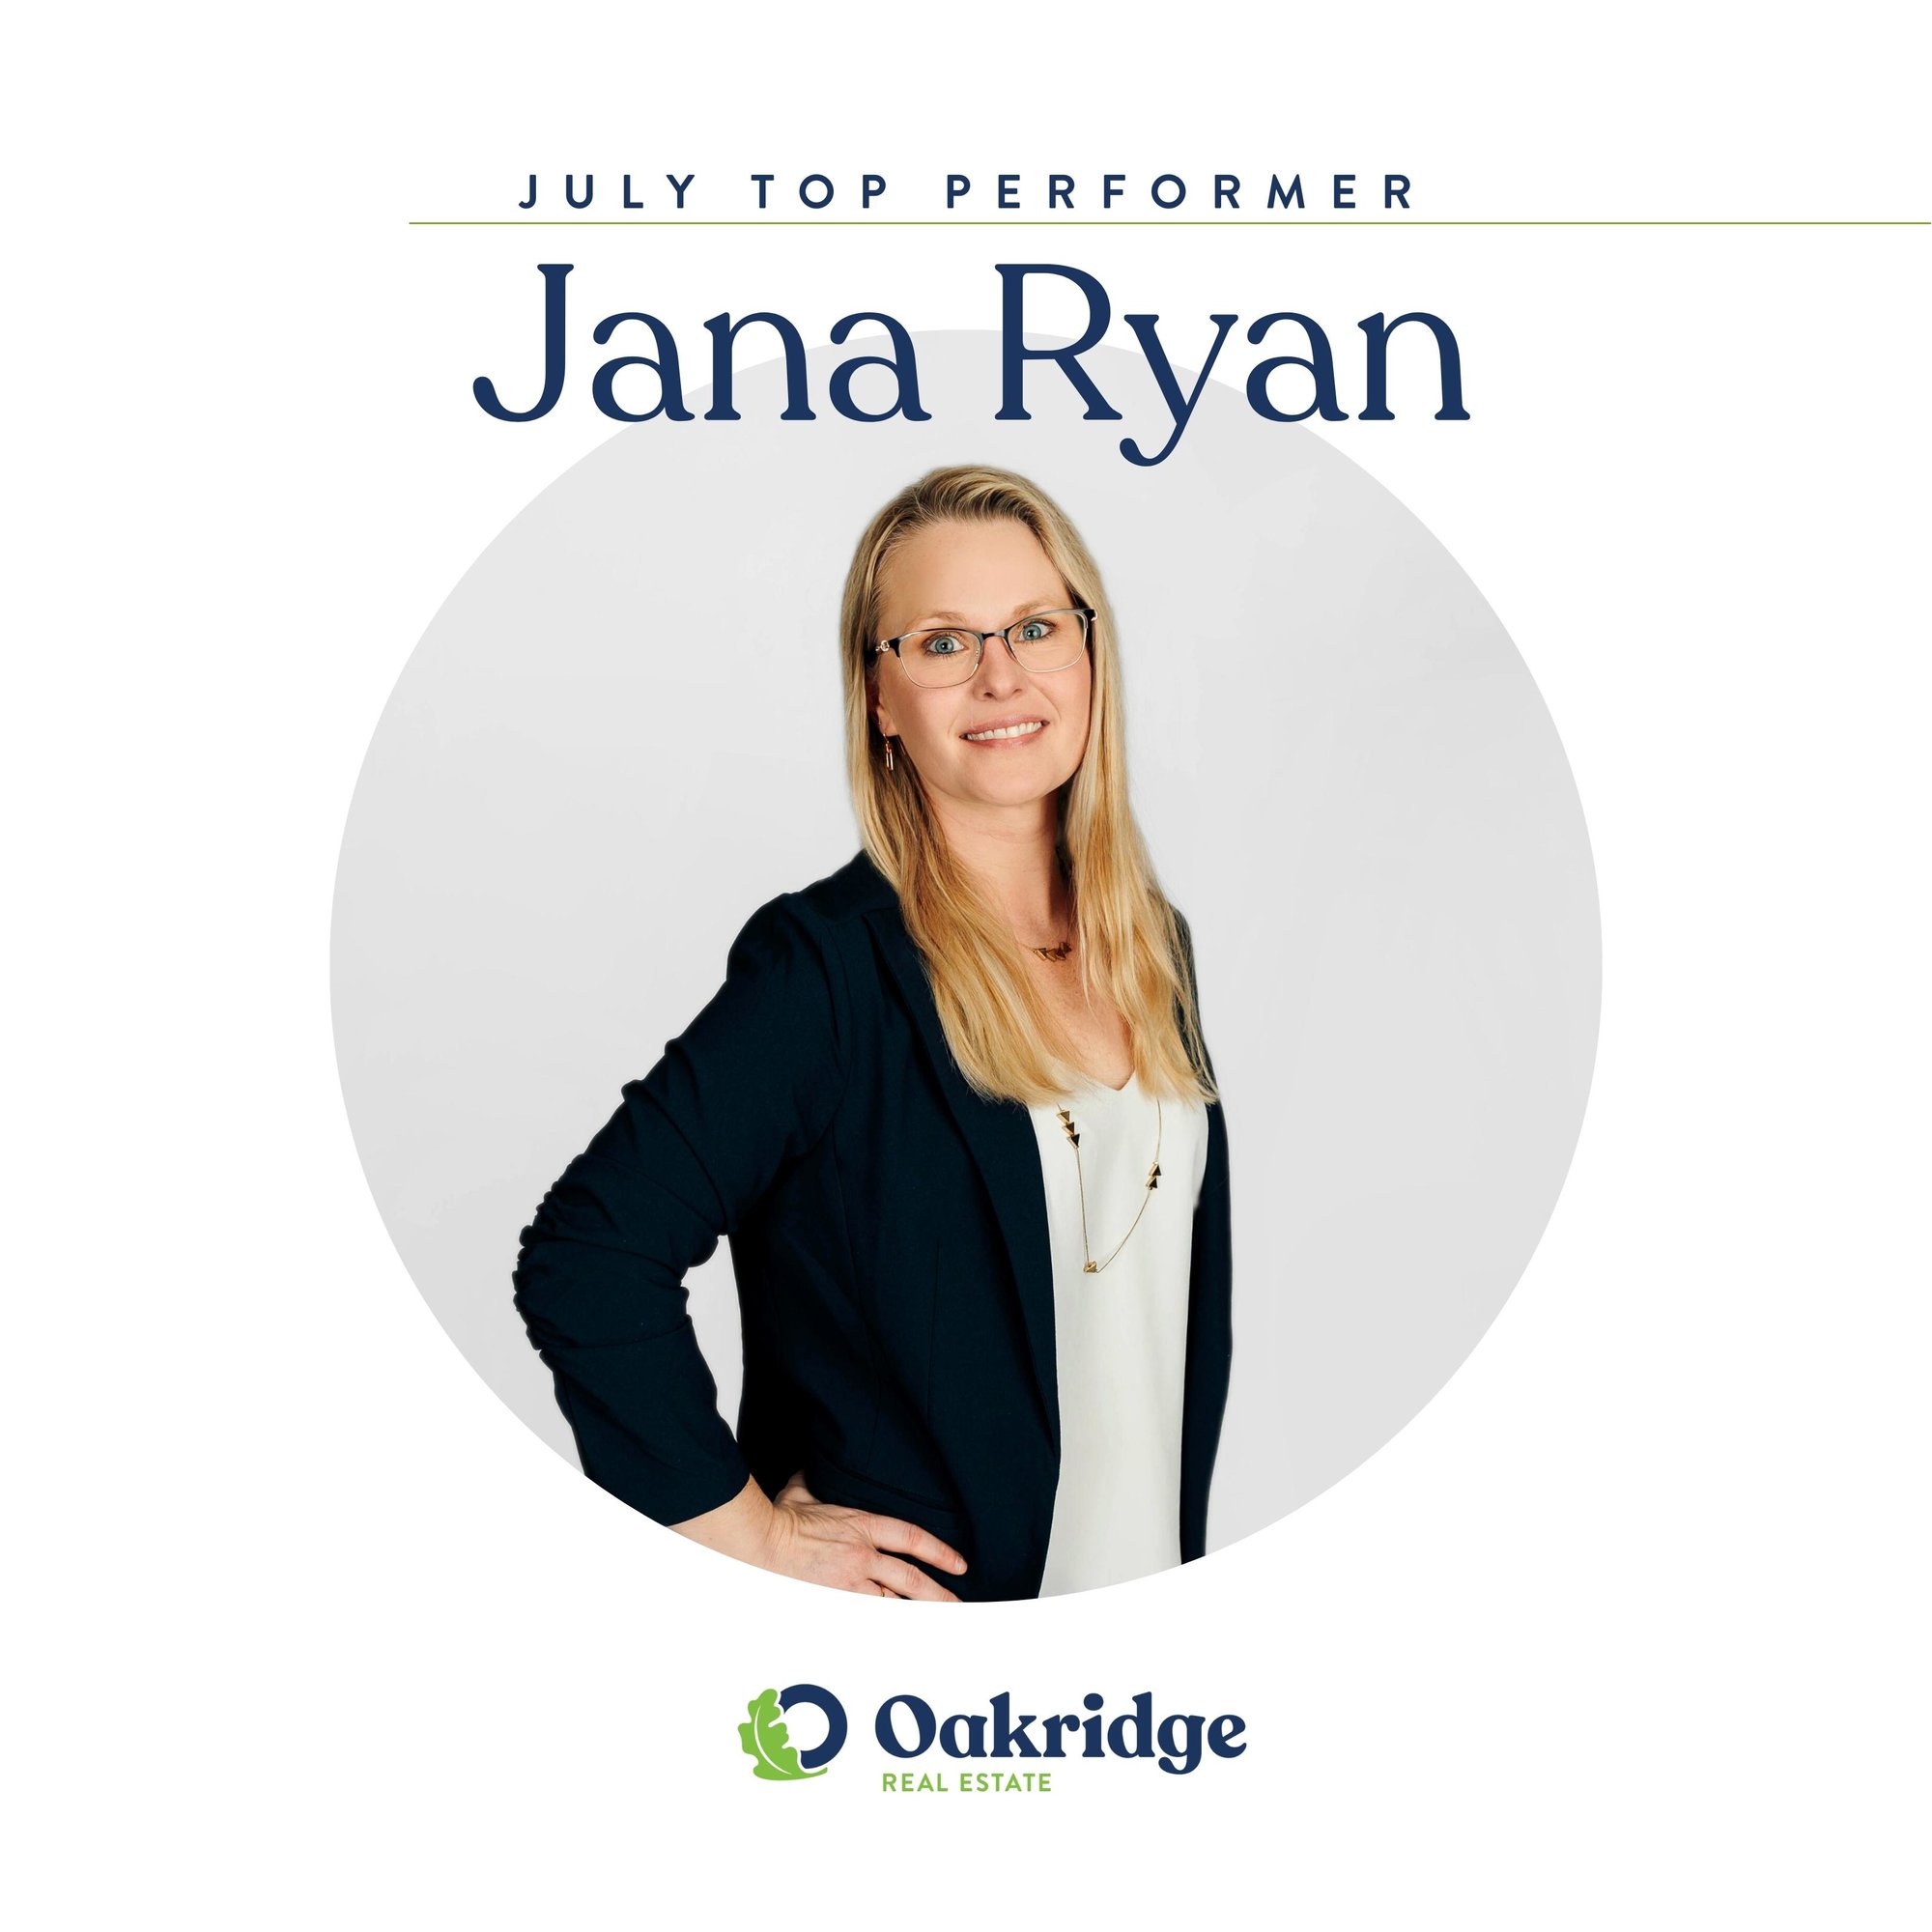 Jana Ryan July Top Performer | Oakridge Real Estate